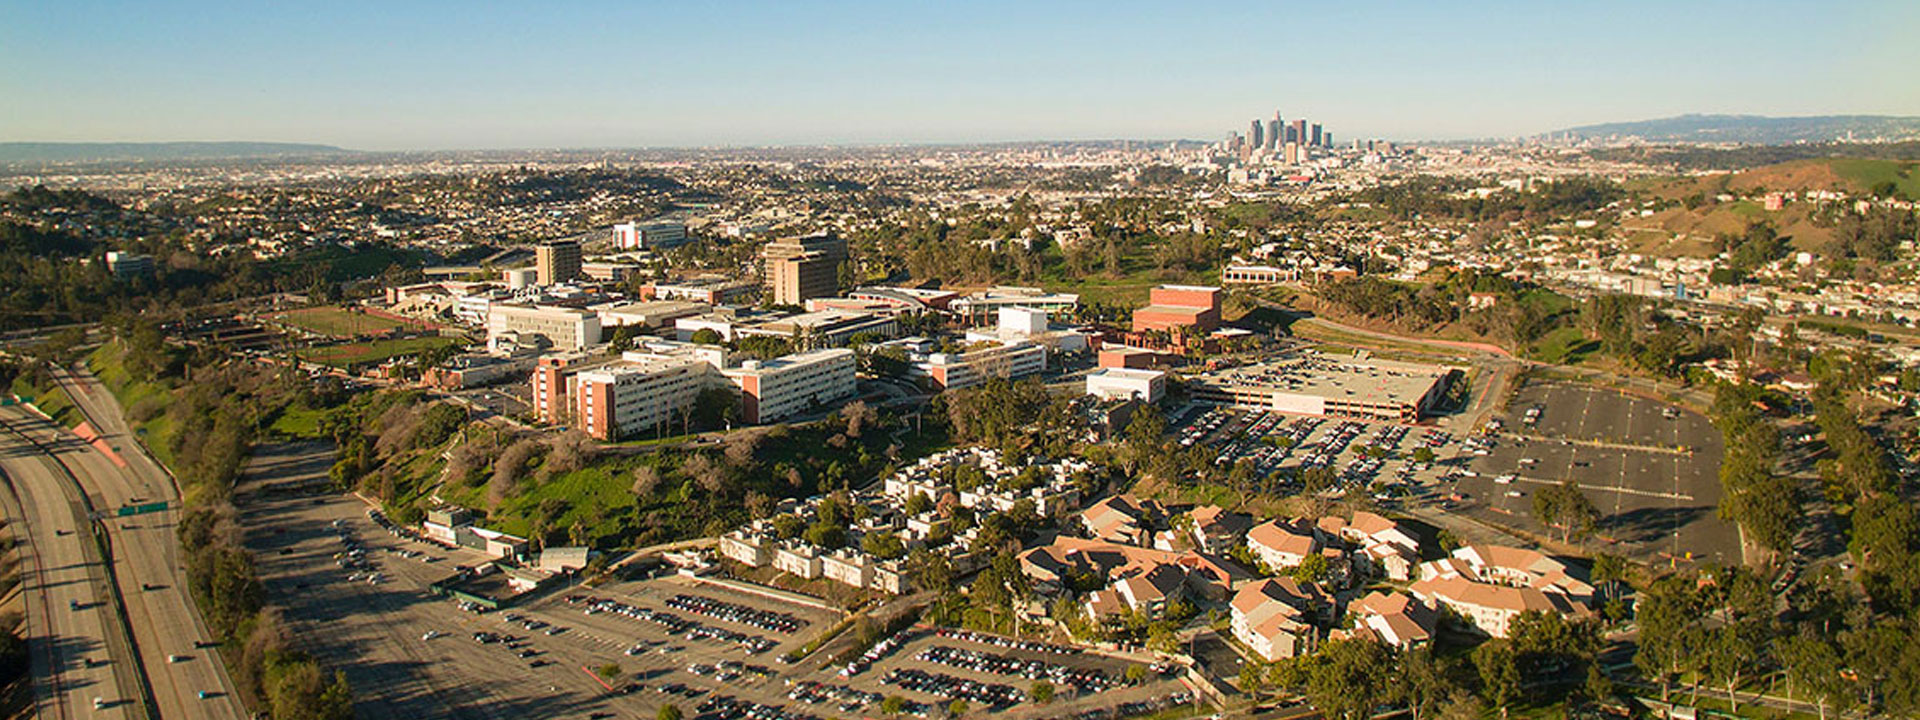 Aerial view of Cal State LA